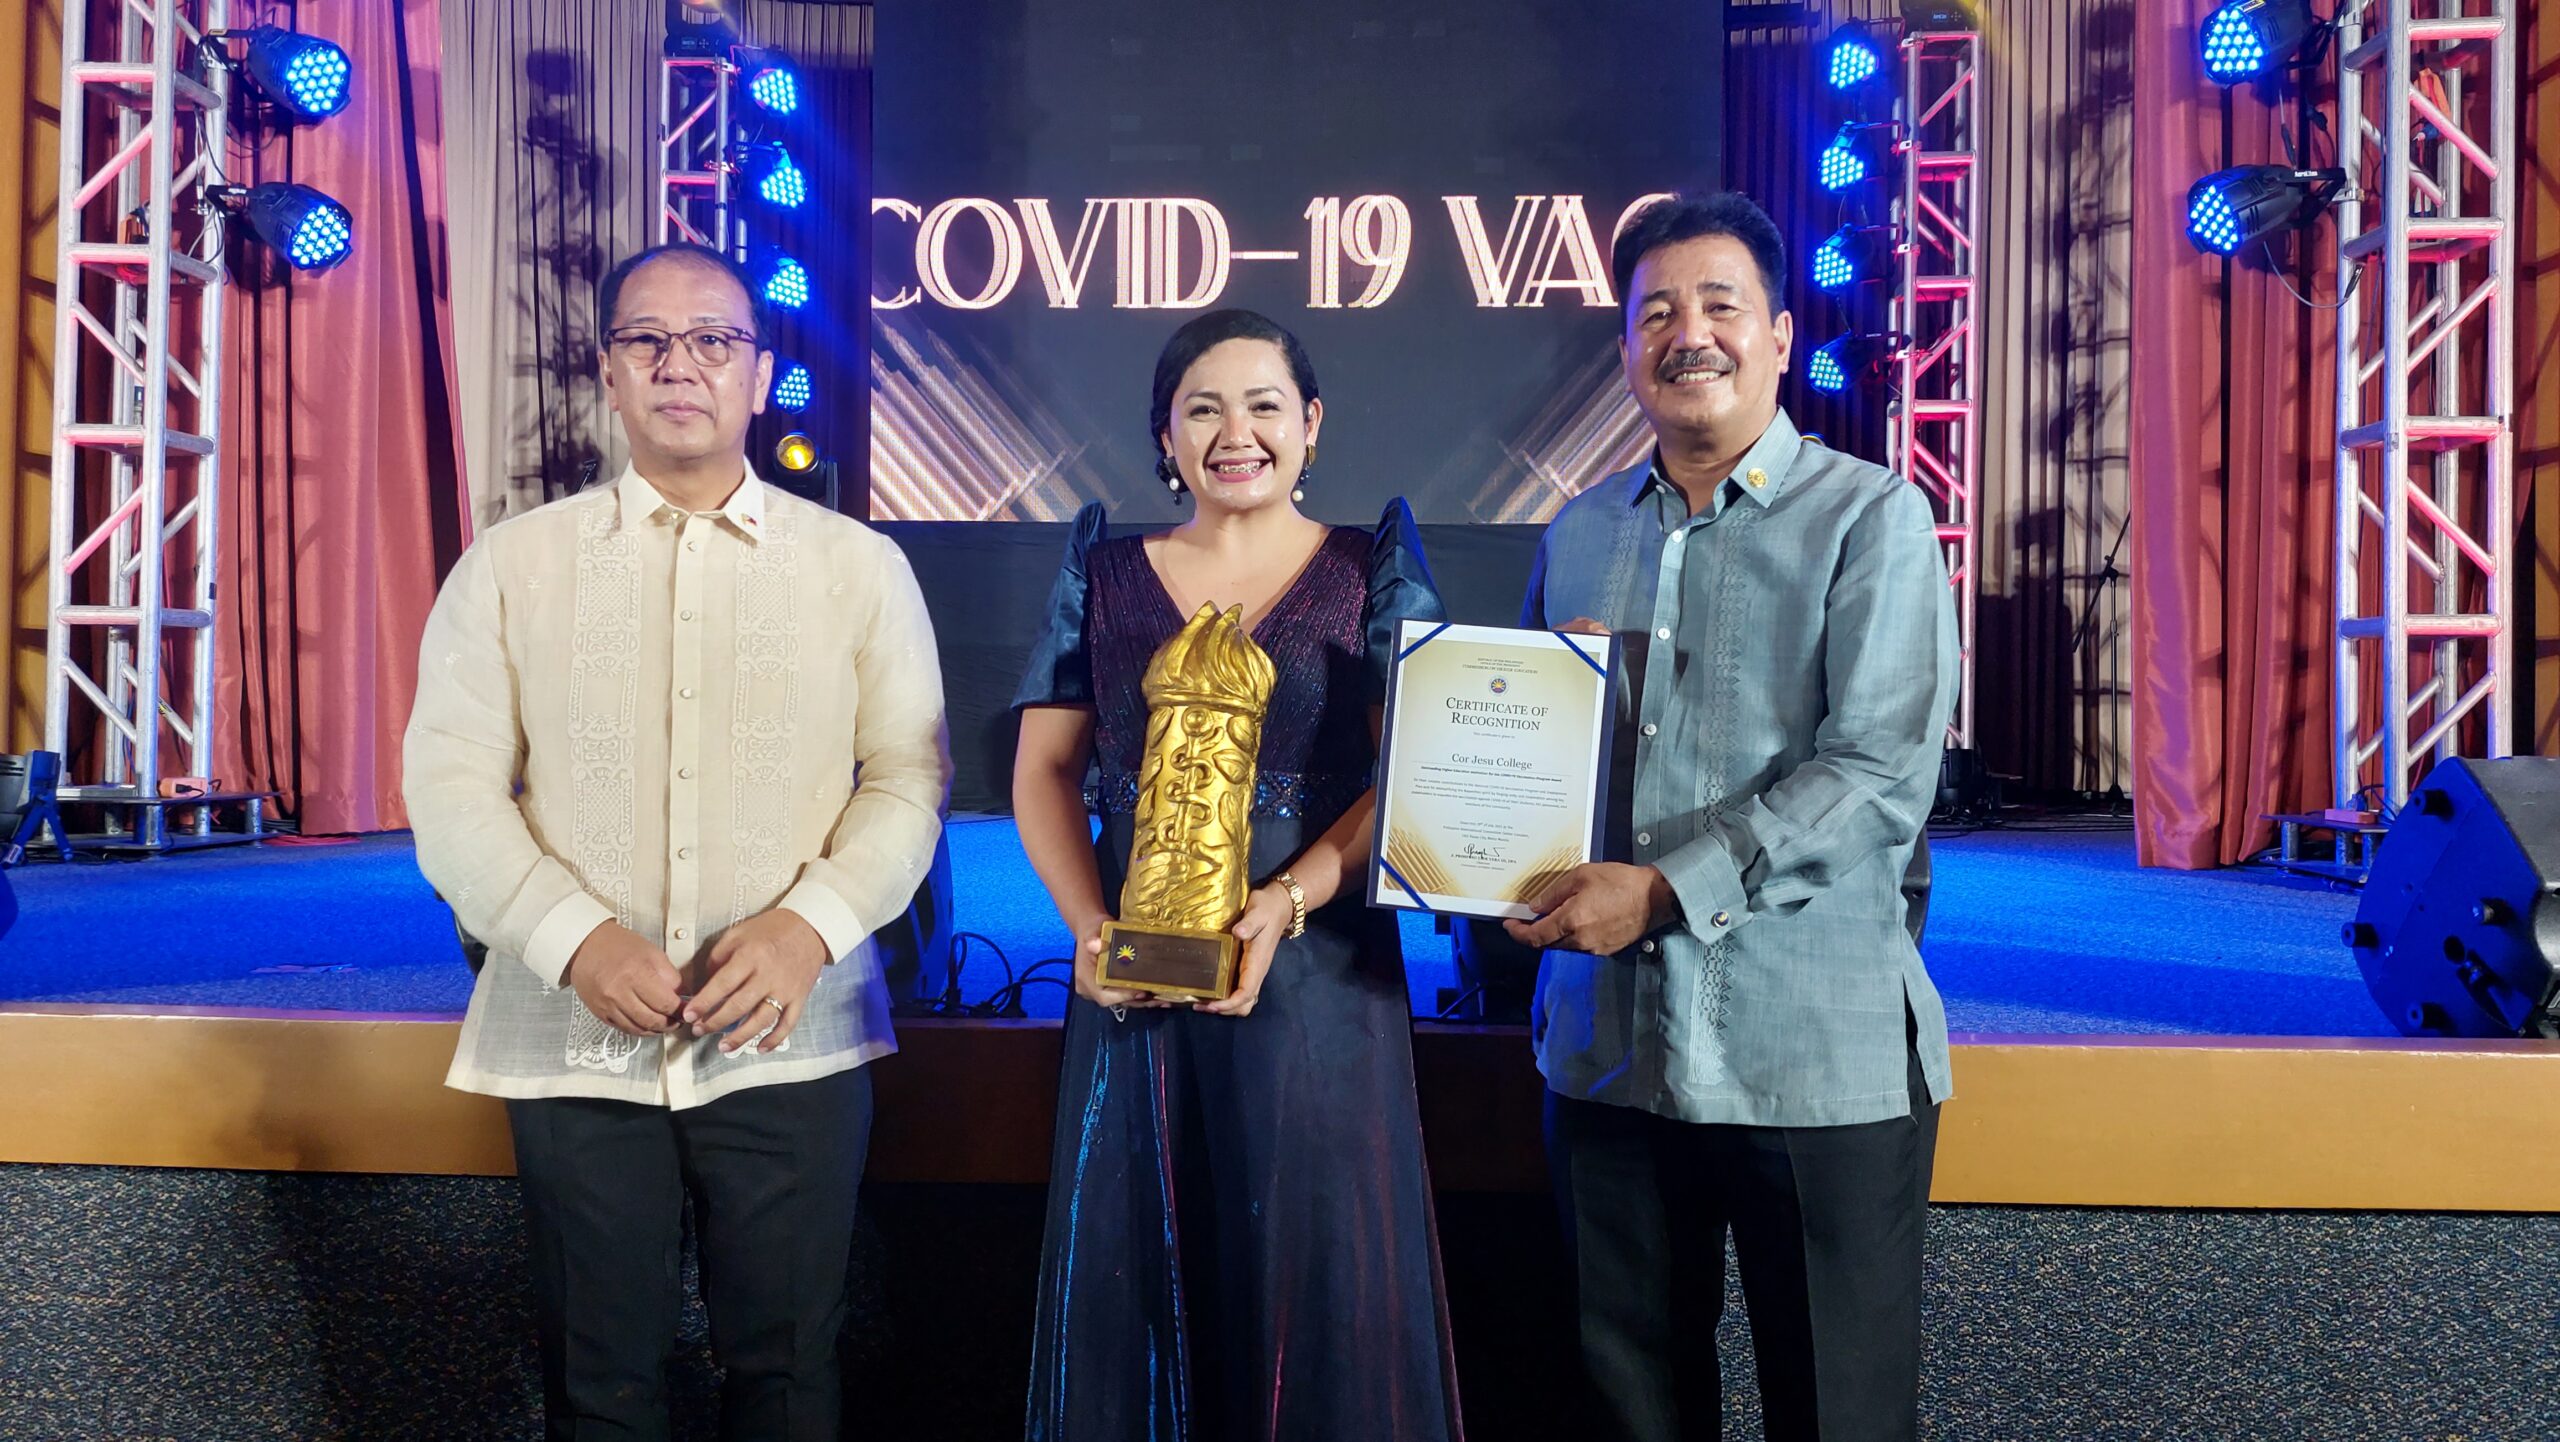 School Receives Award for Outstanding Vaccination Program in Region XI